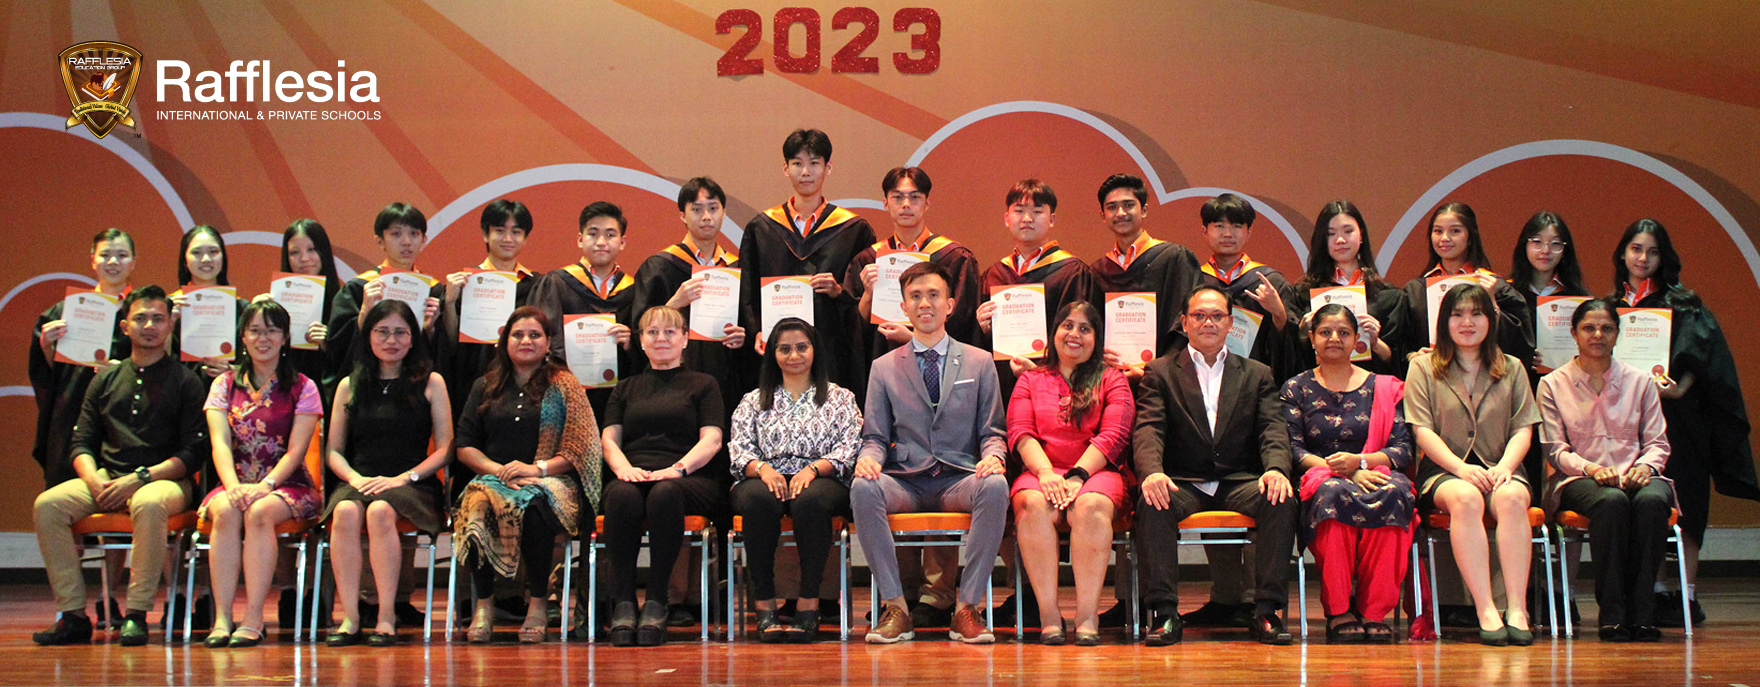 Award Ceremony & Graduation Day 2023